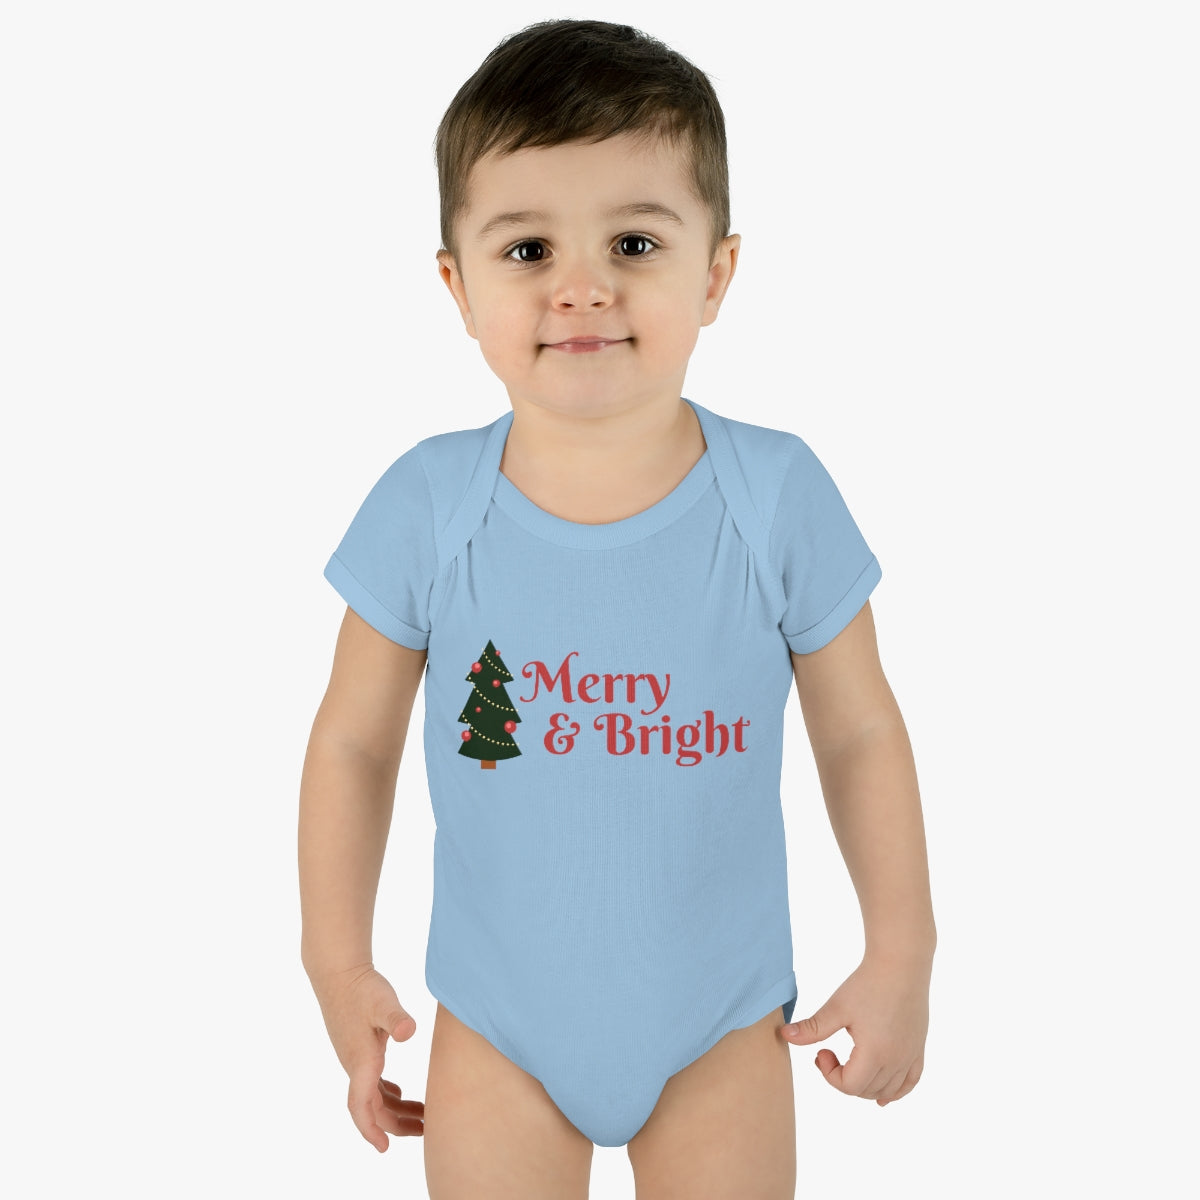 Merry and bright - Infant Baby Rib Bodysuit - CrazyTomTShirts